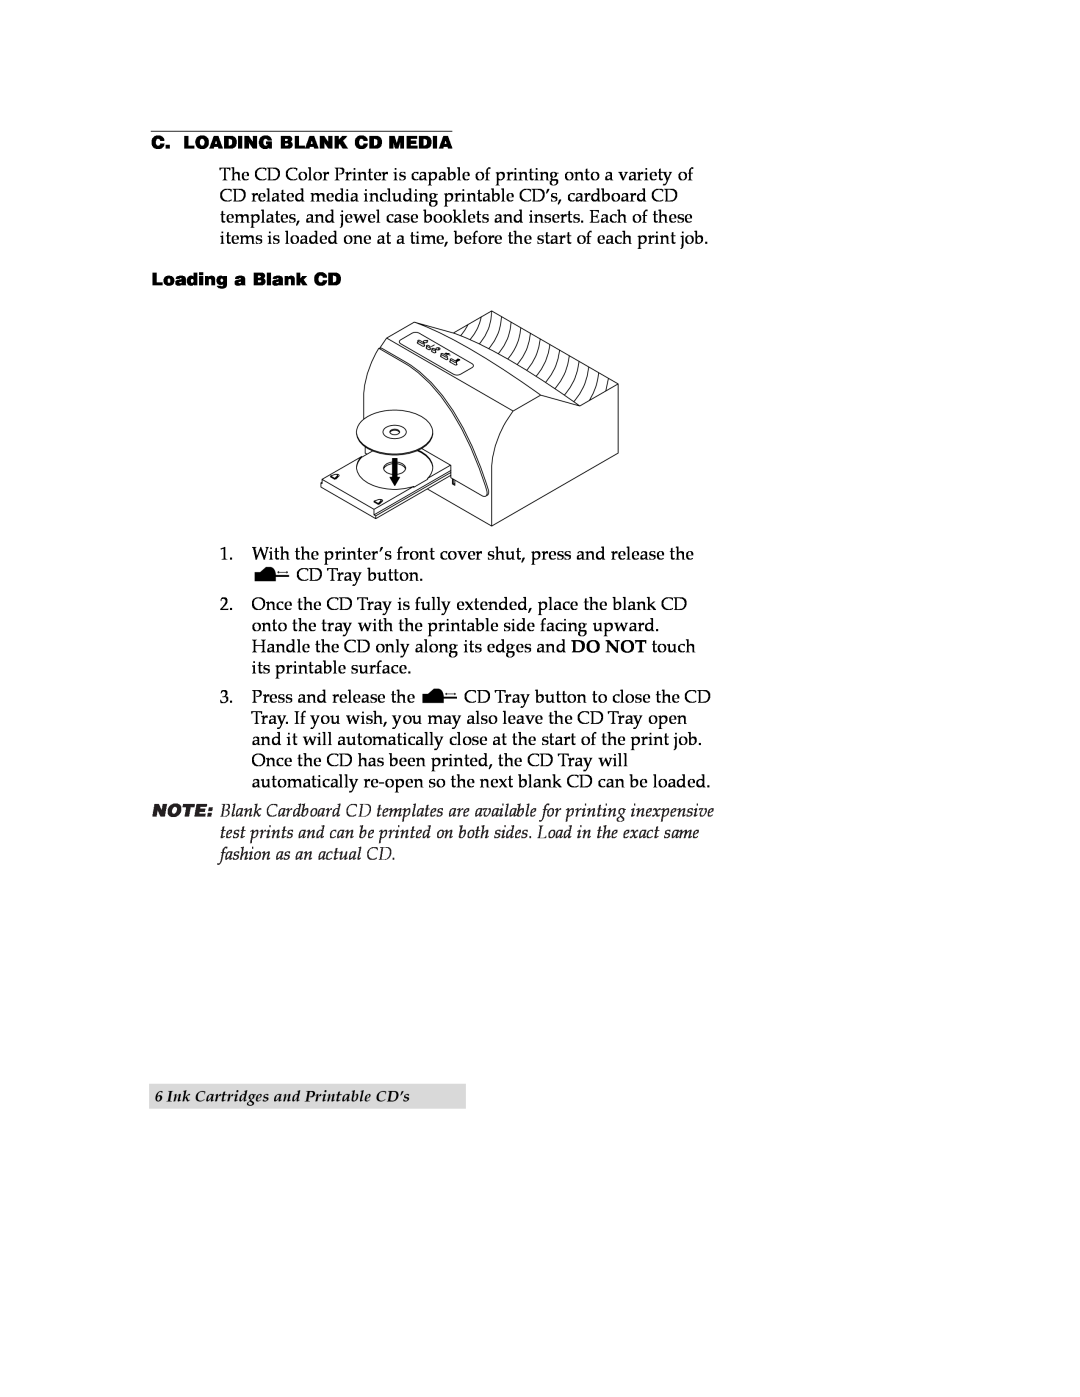 Primera Technology CD Color Printer II manual C. Loading Blank Cd Media, Loading a Blank CD 